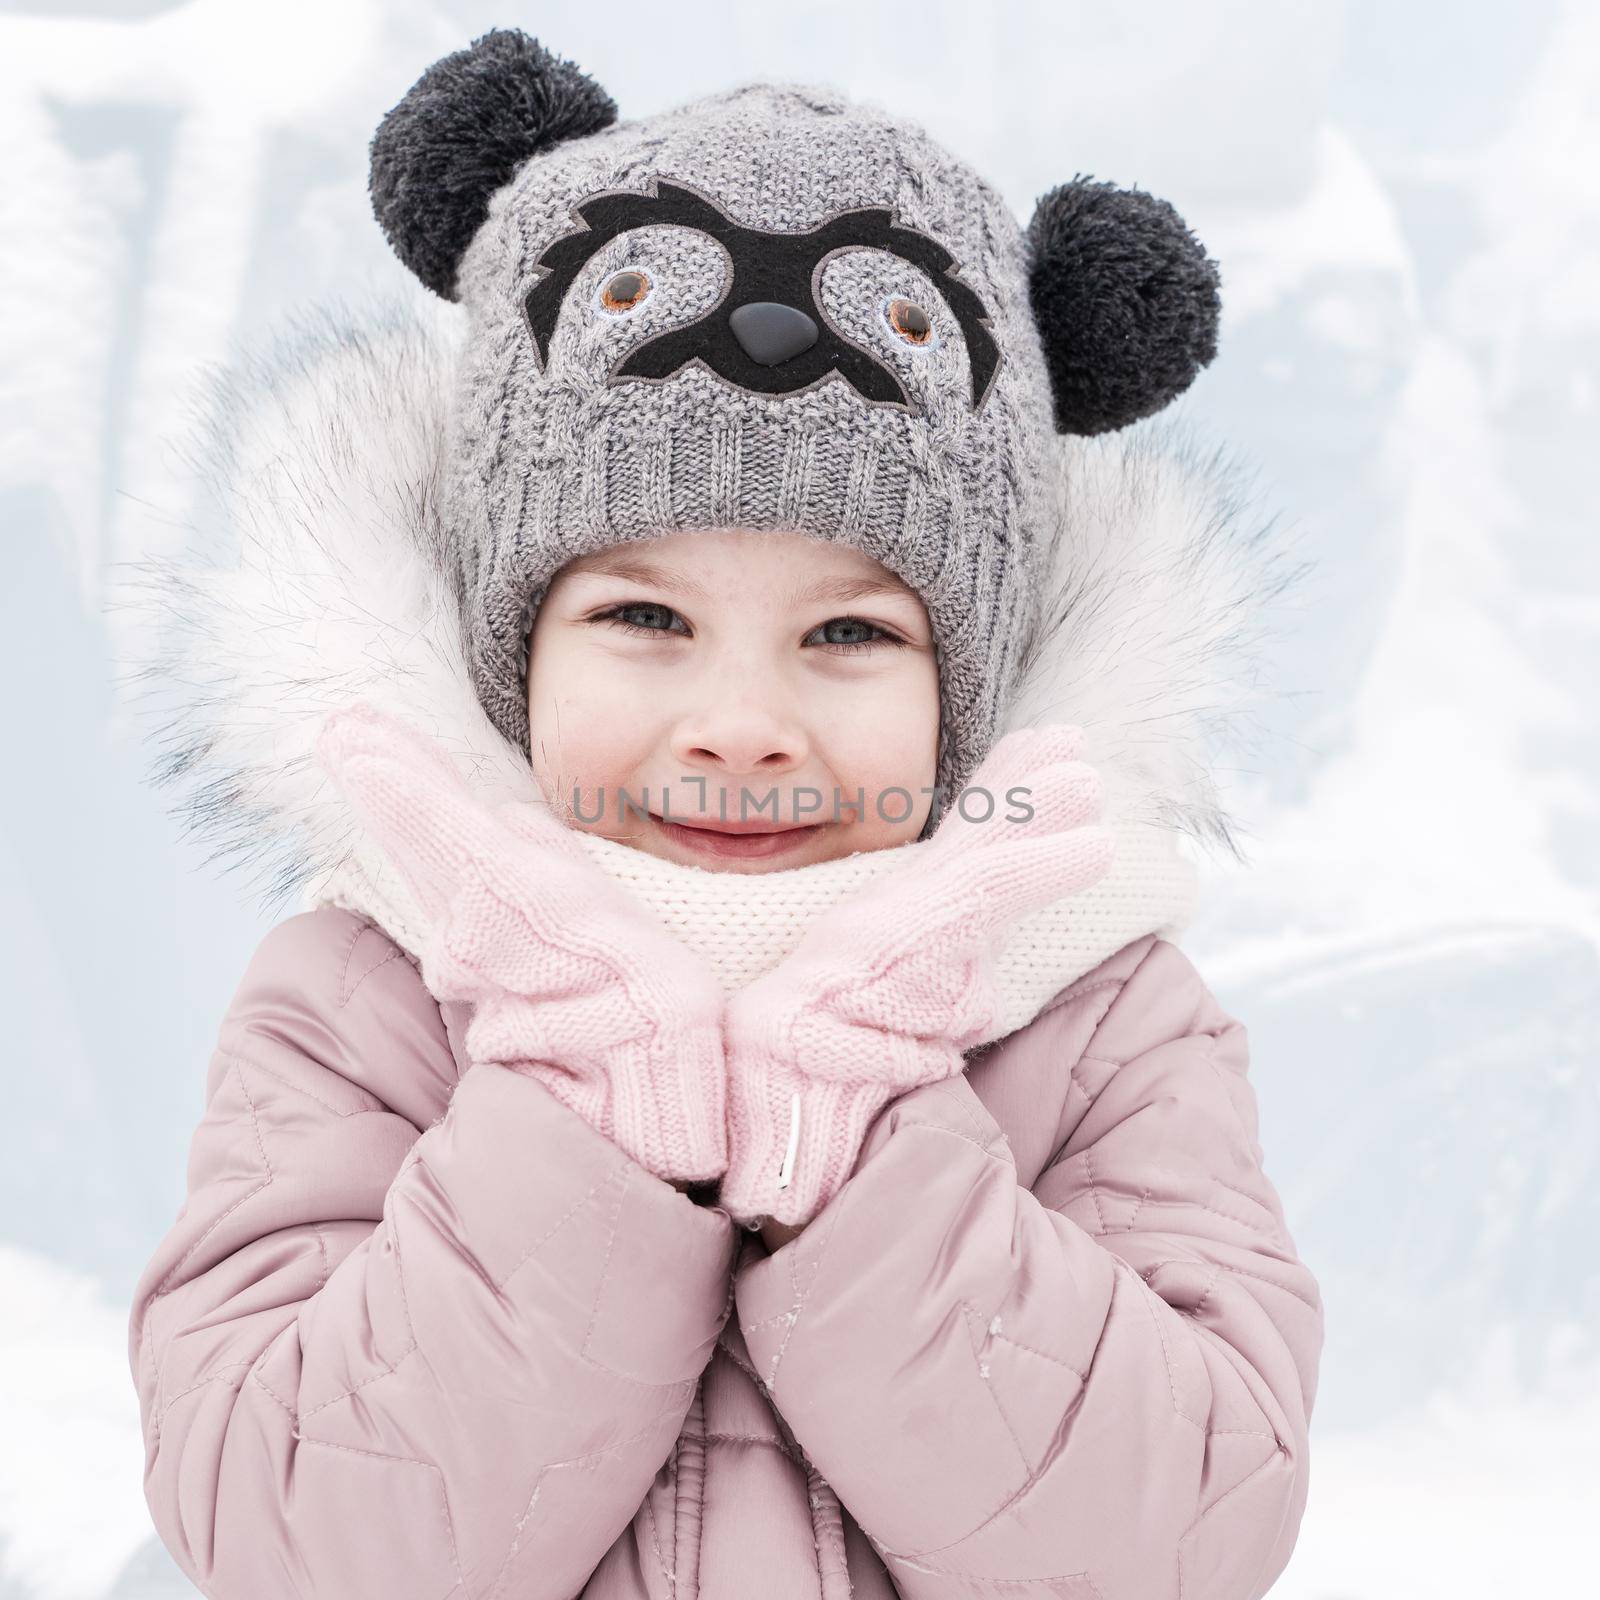 portrait of a happy little girl on a winter snowy day